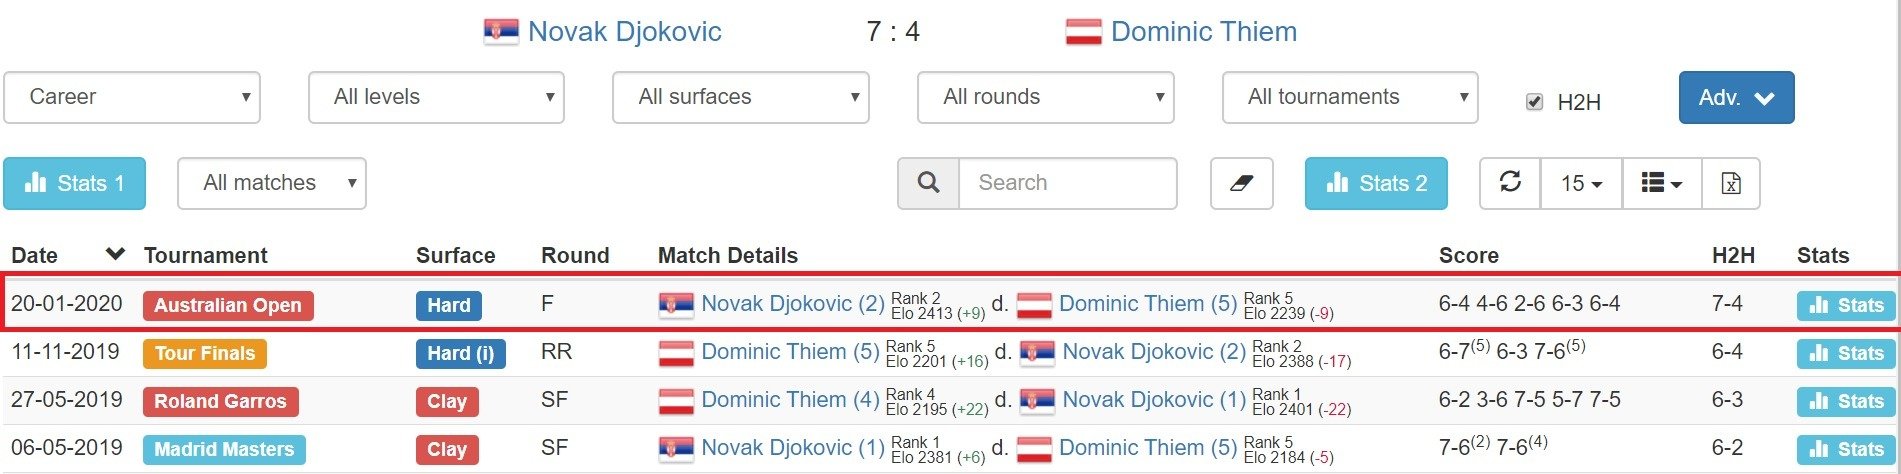 tennis atp djokovich vs thiem